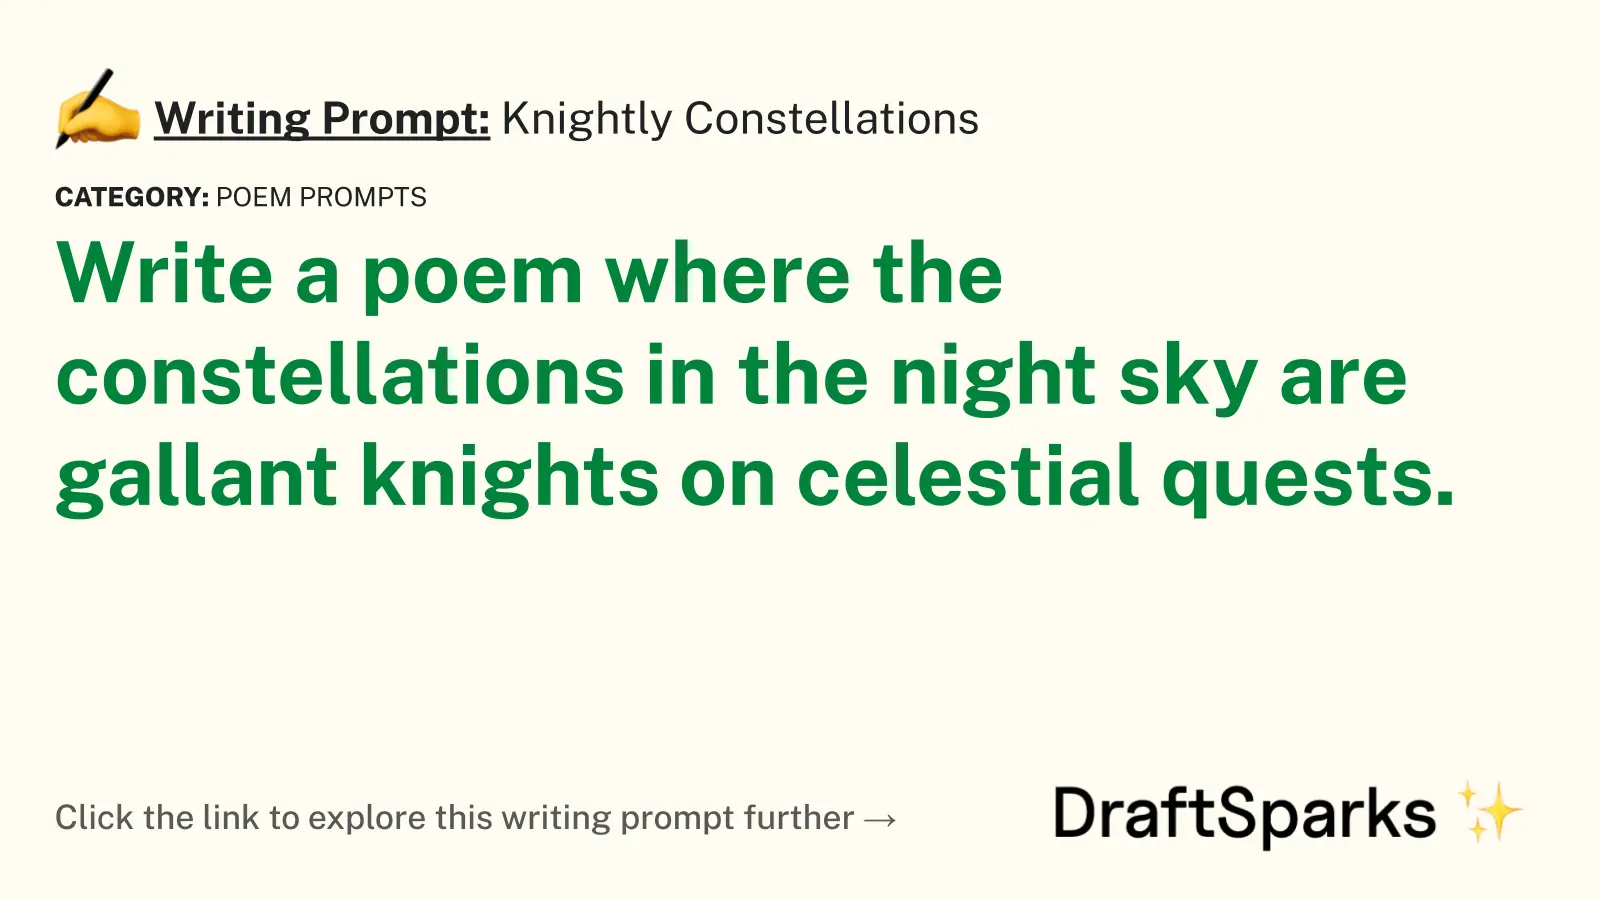 Knightly Constellations